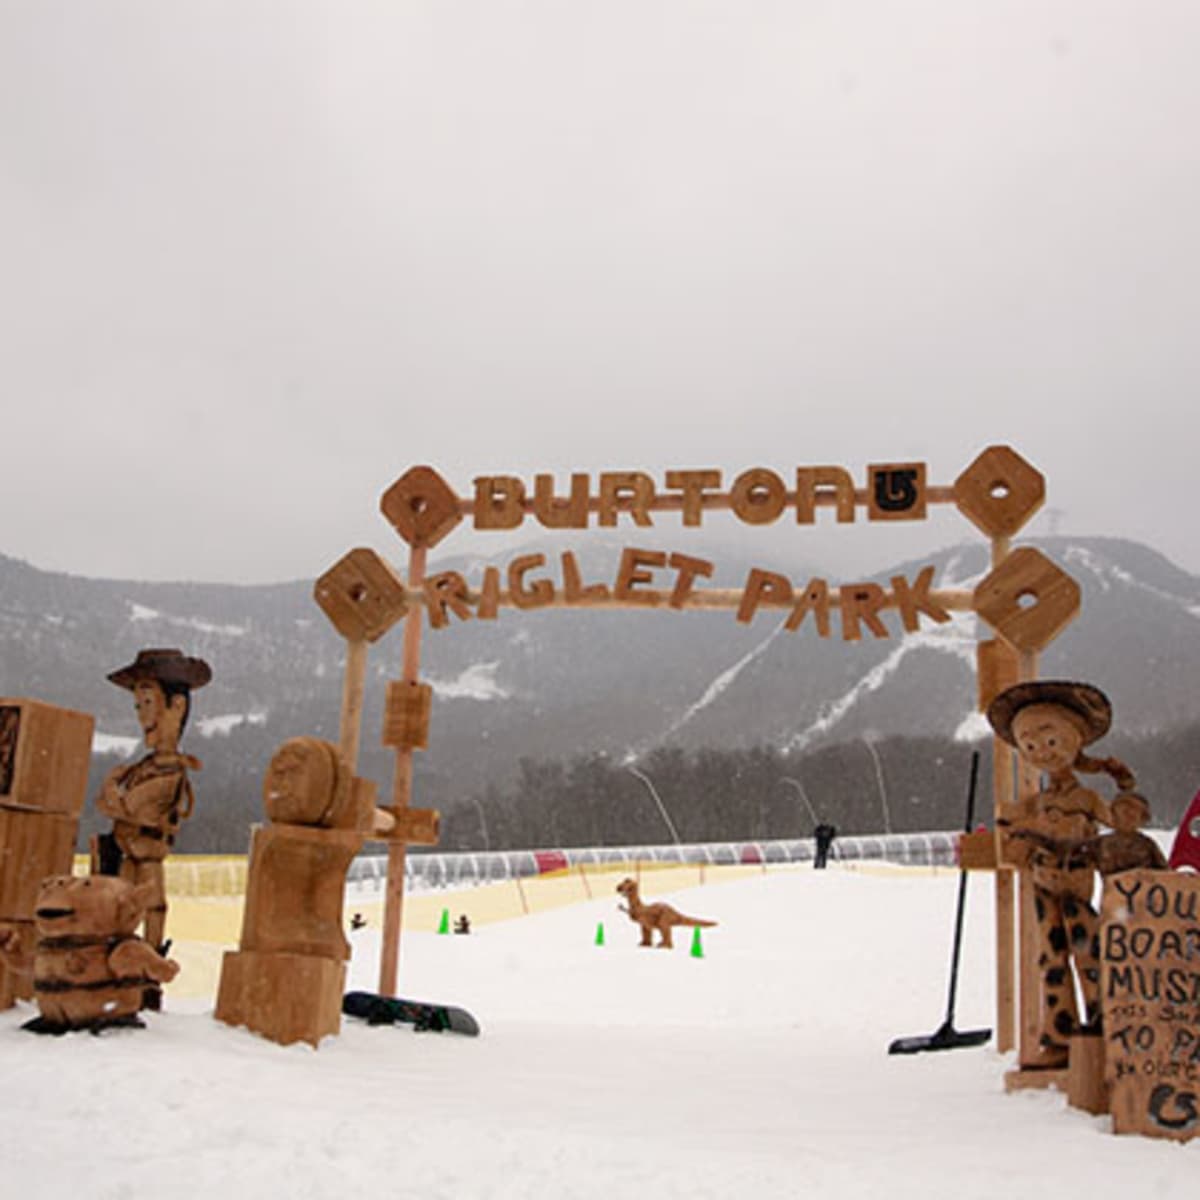 BURTON SNOWBOARDS BRINGS A NEW RIGLET PARK TO JAY PEAK RESORT FEATURING  DISNEY·PIXAR TOY STORY THEME - Snowboarder